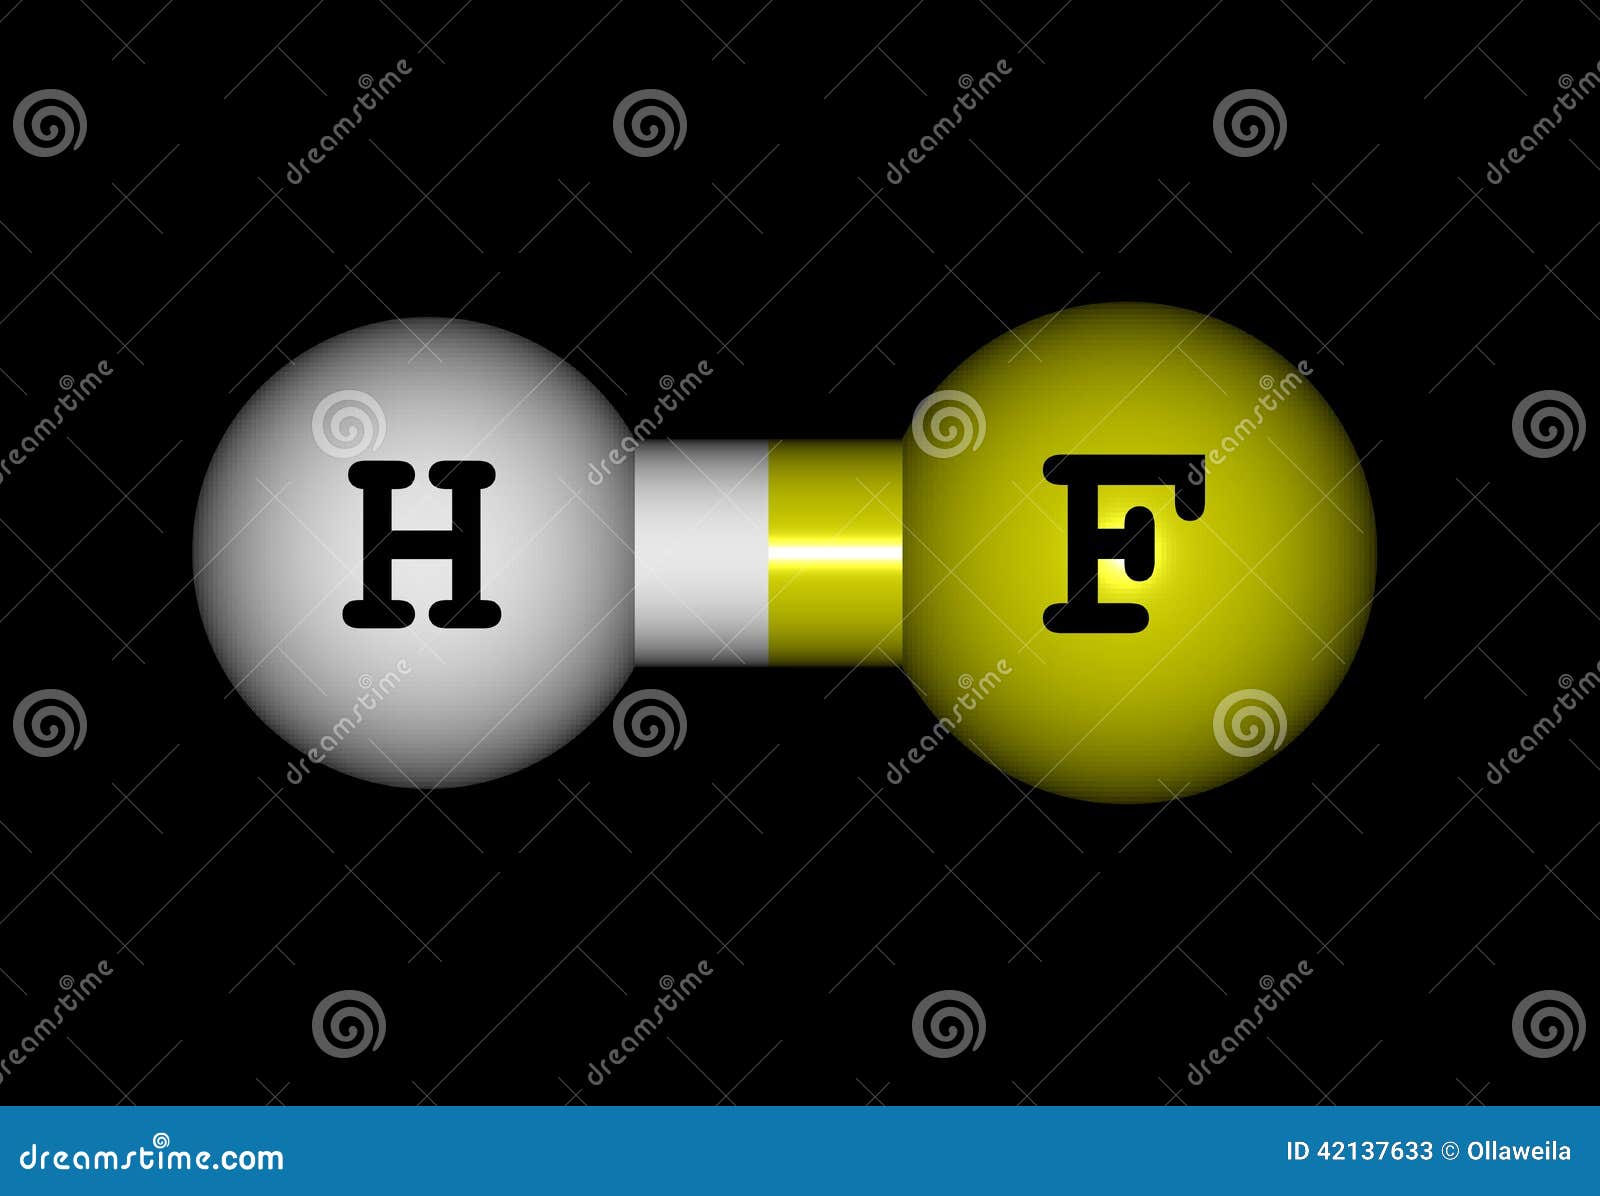 Формула фтора водорода. Фтористый водород формула. Фторид водорода. Фтористый водород HF. Модель молекулы фтора.